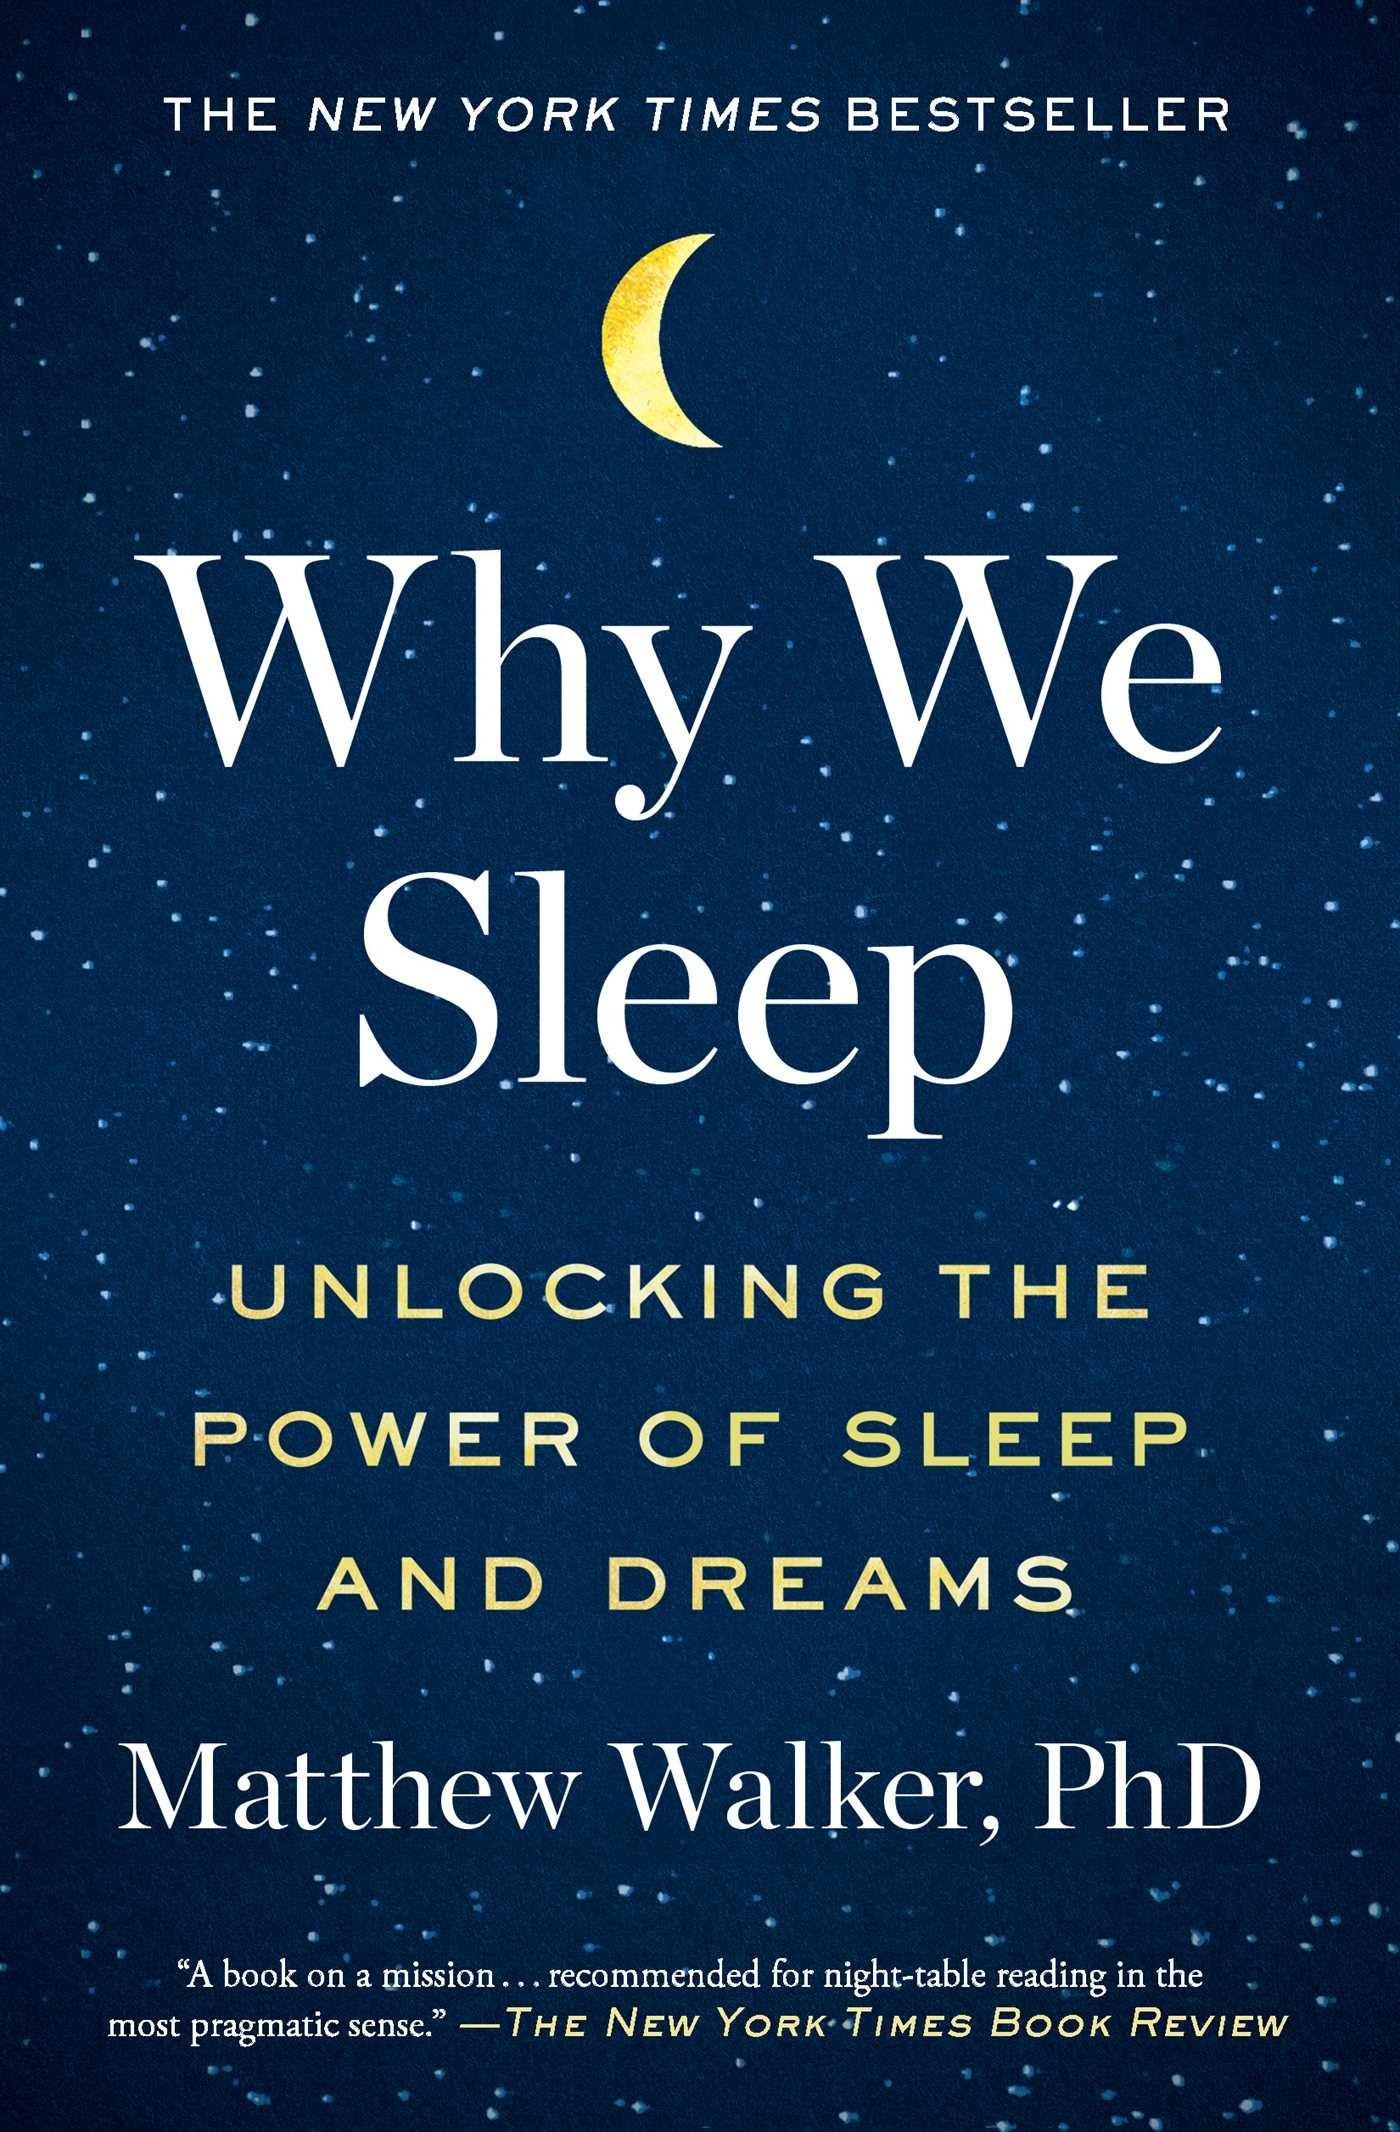 Why We Sleep: Unlocking the Power of Sleep and Dreams (Matthew Walker)